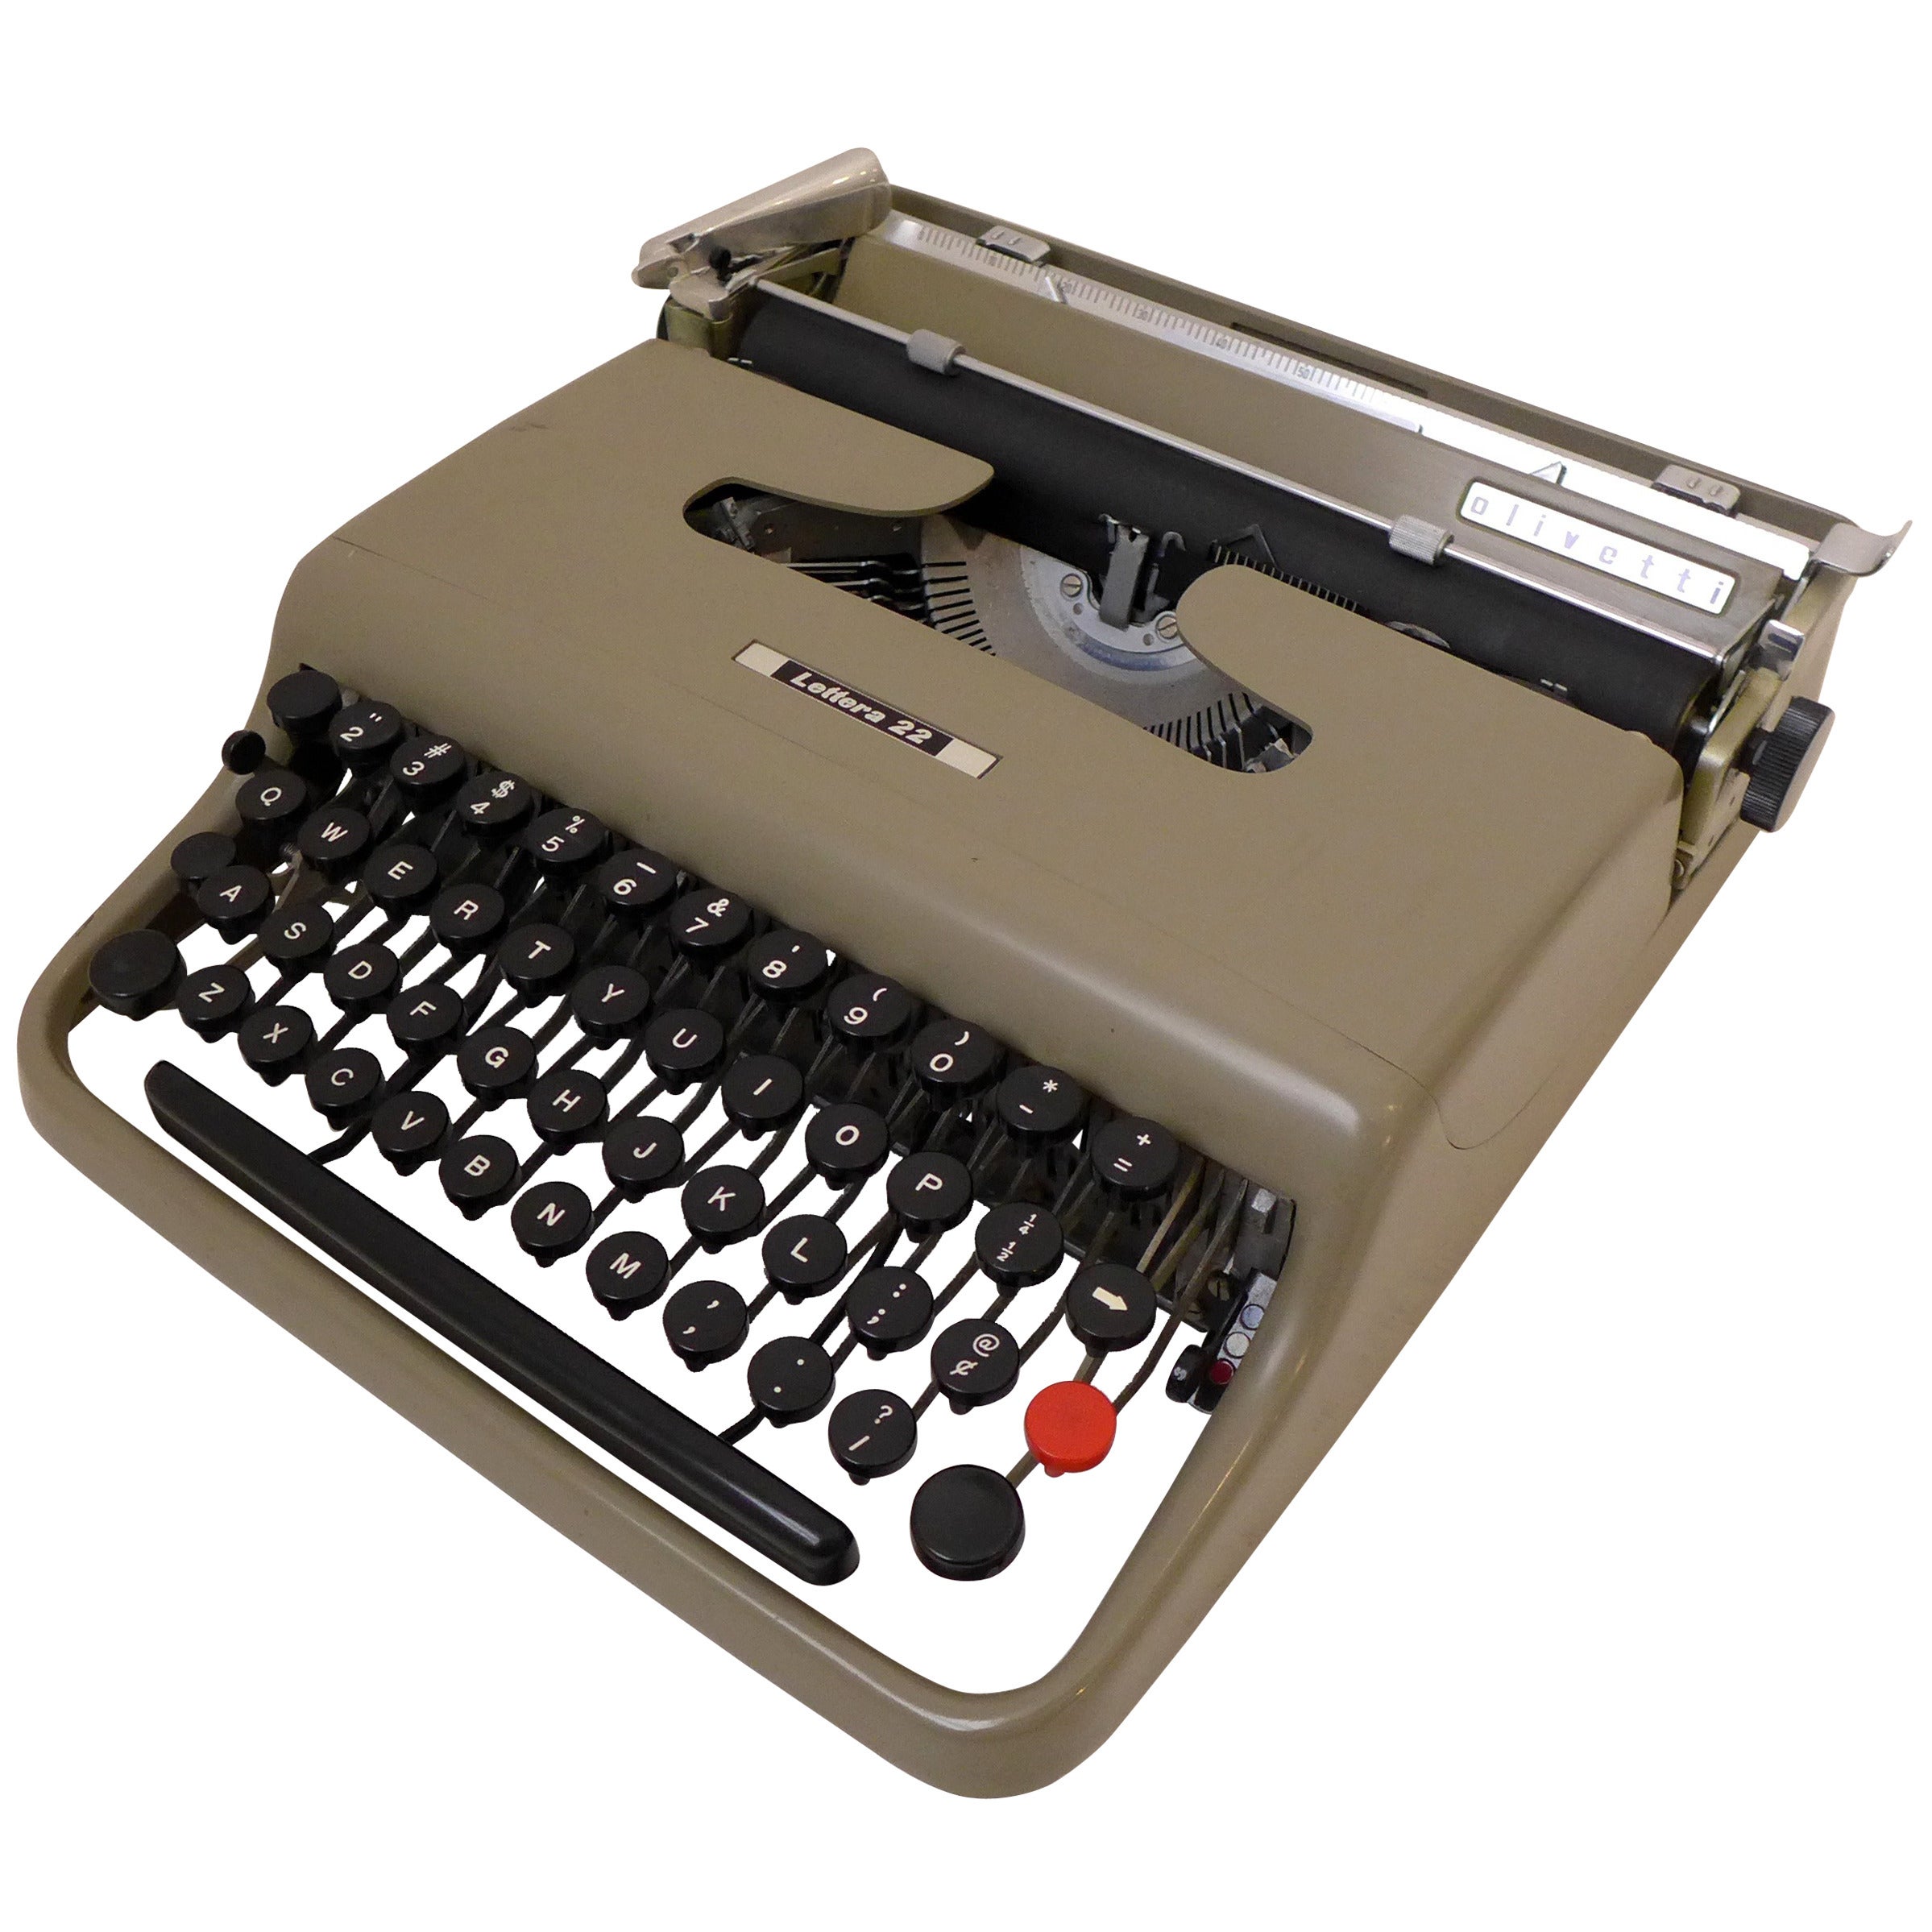 Lettera 22 Portable Typewriter by Olivetti